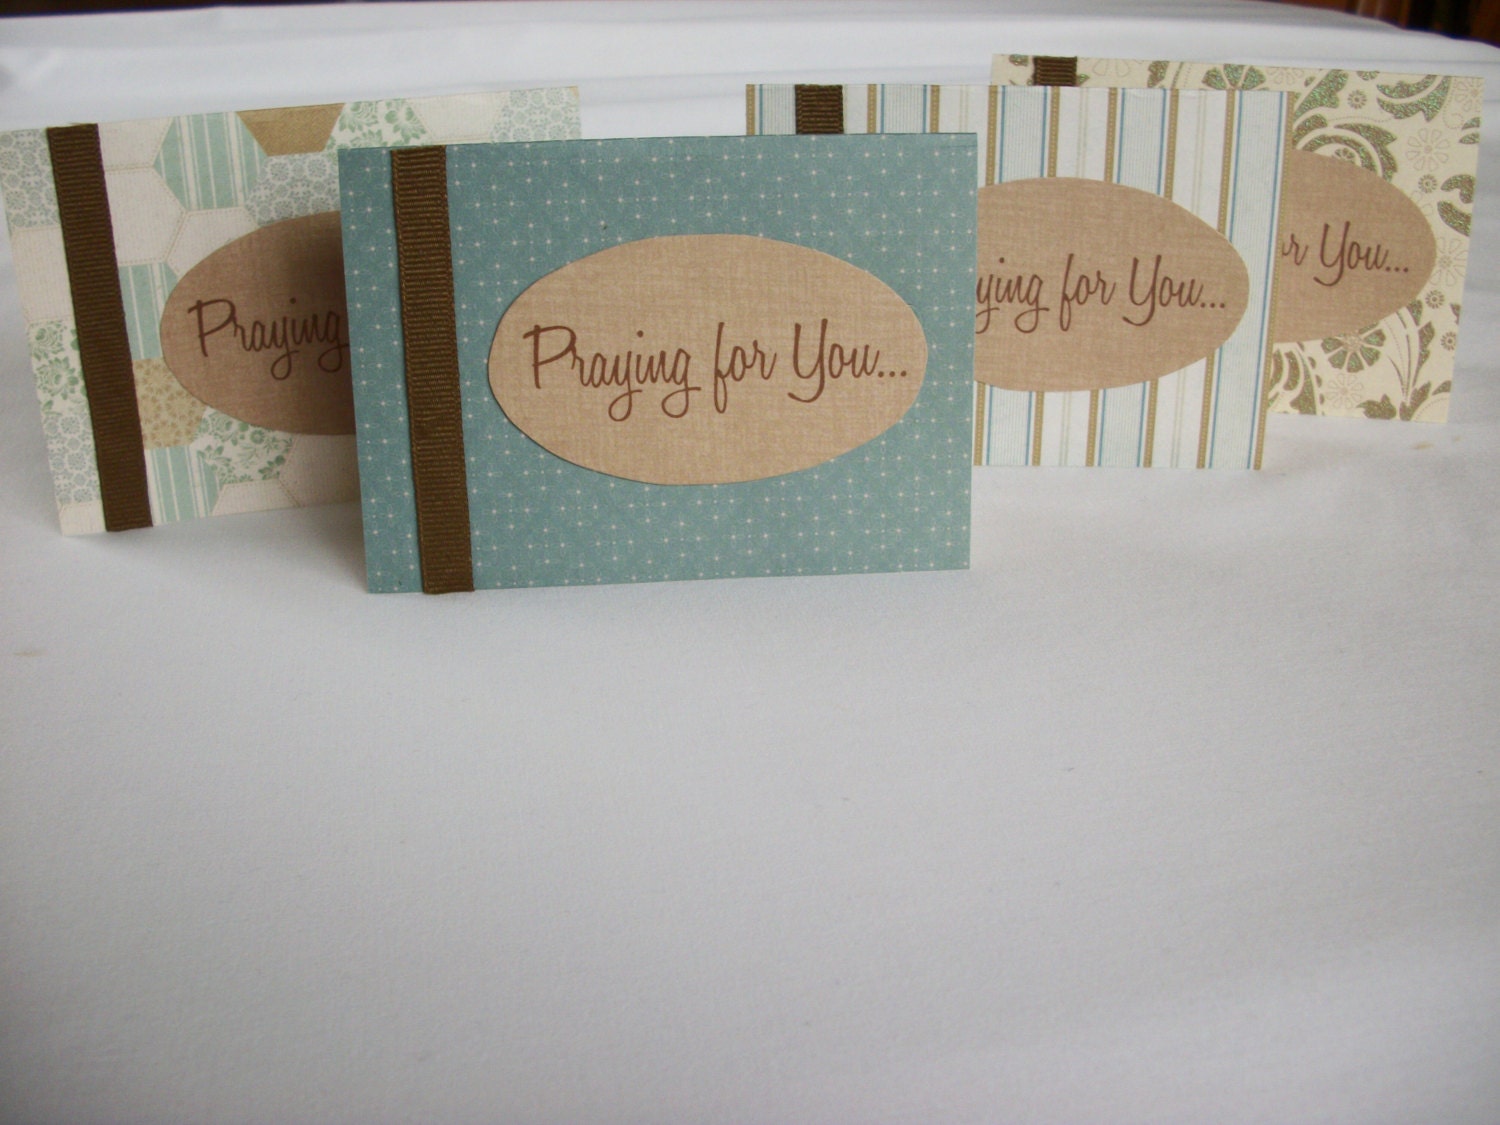 Set of 4 "Praying for You..." Cards - Handmade Encouragement Cards